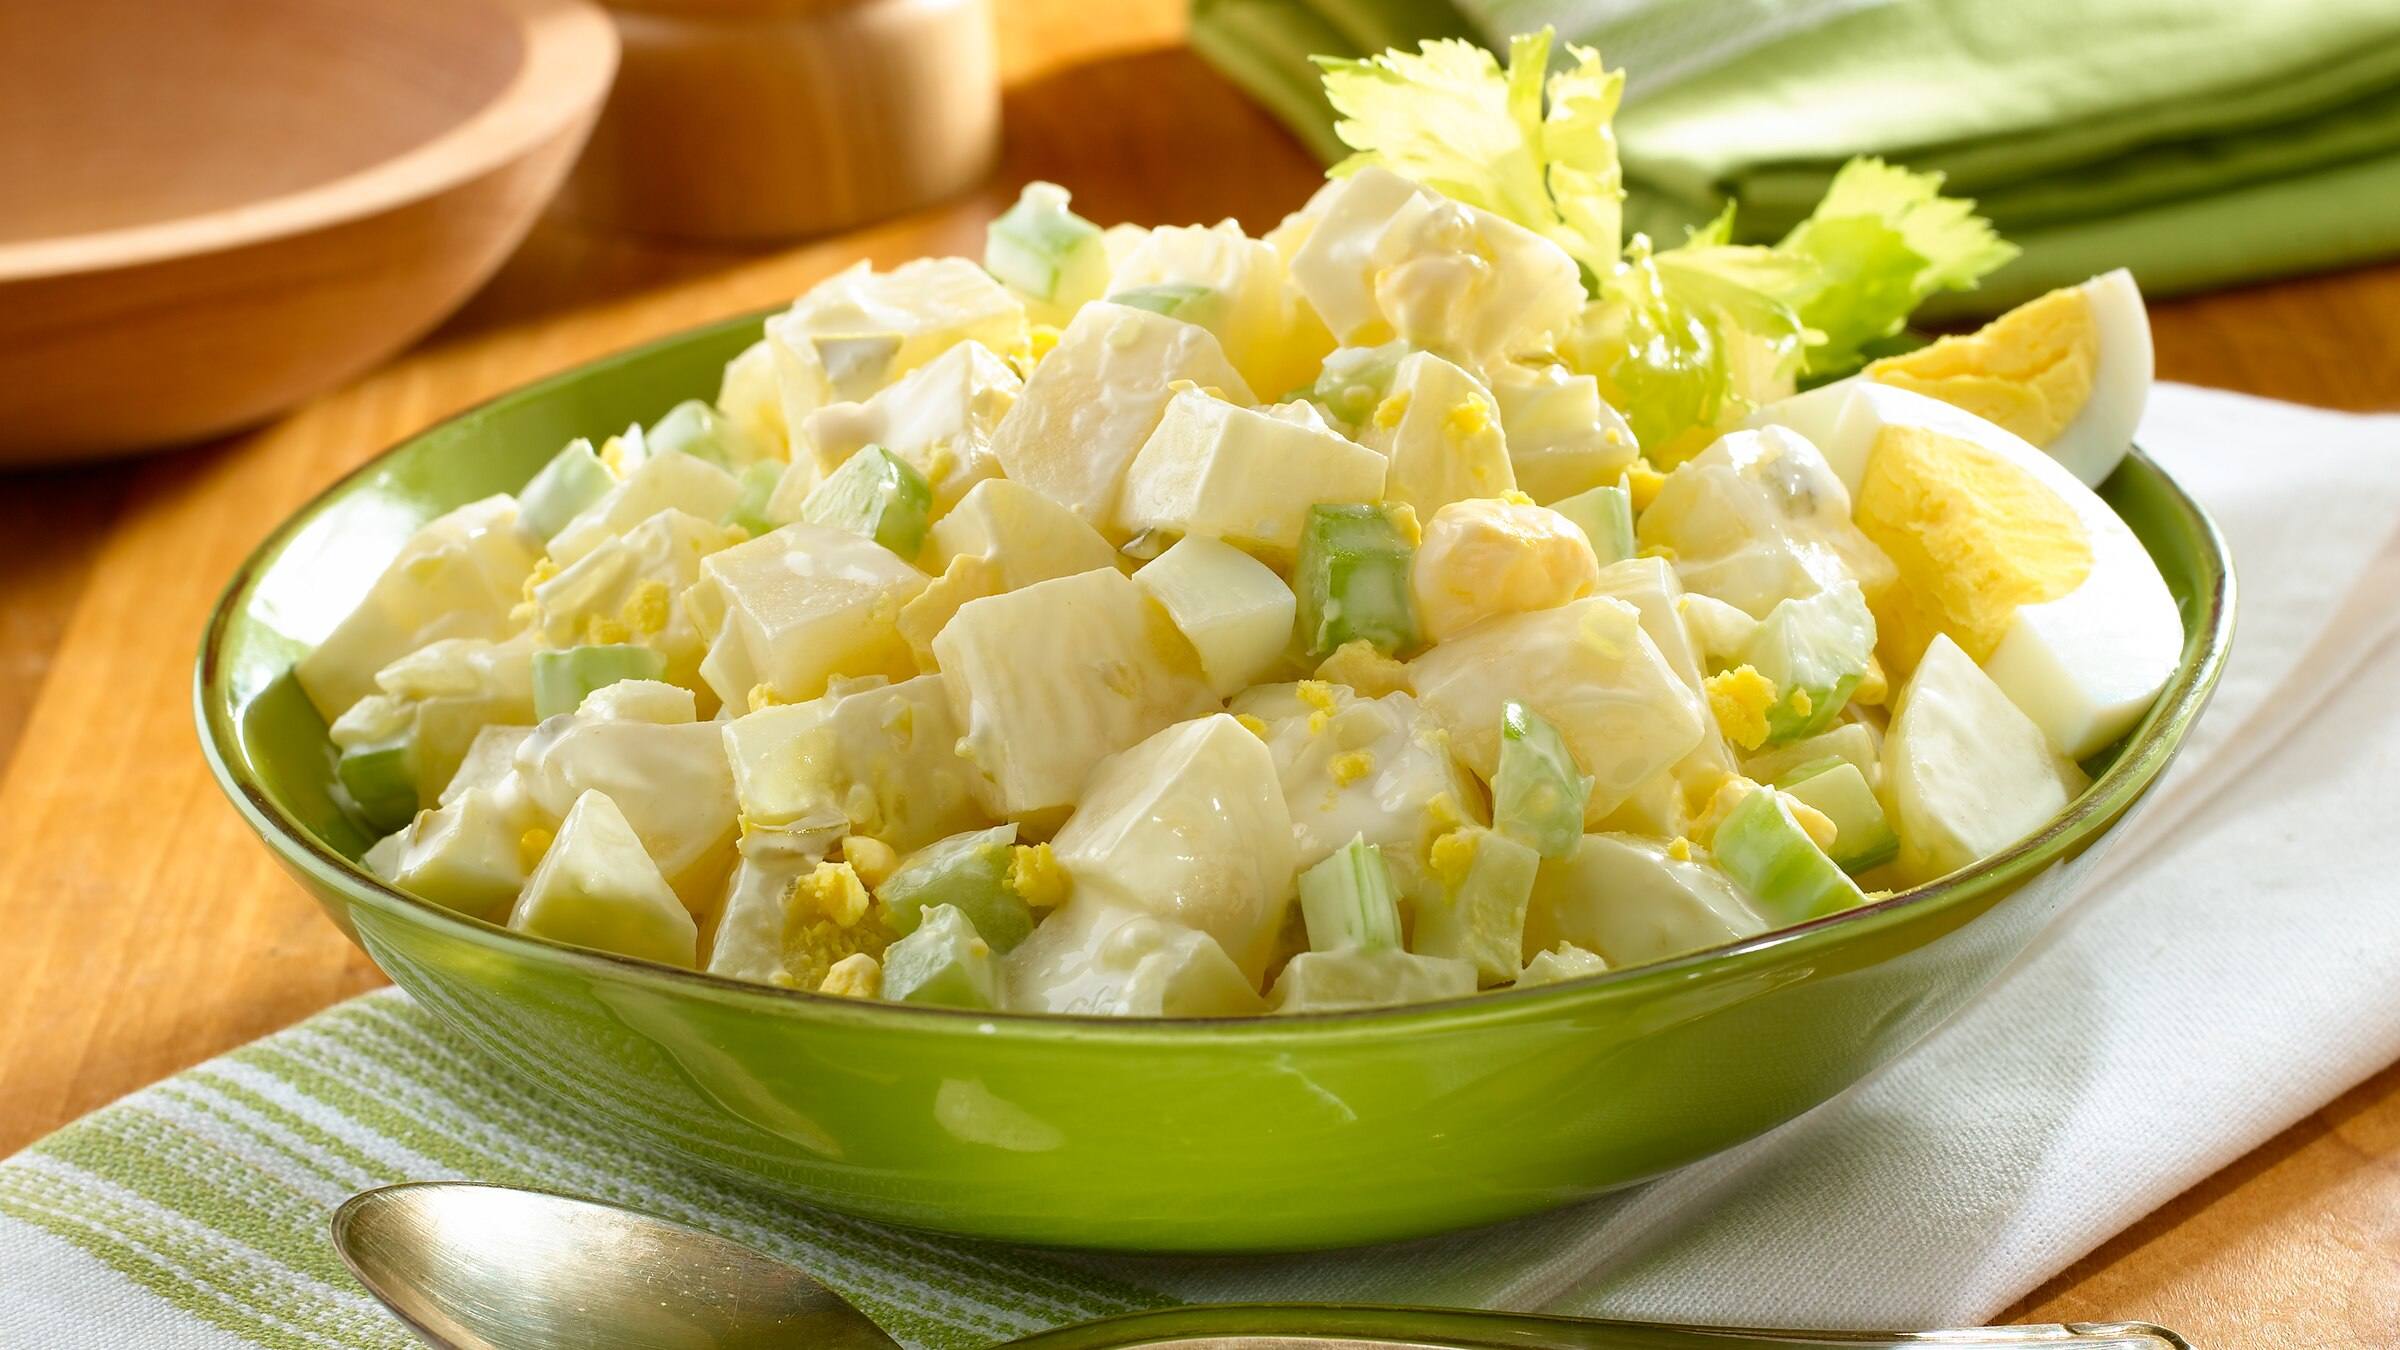 Country Potato Salad Recipe